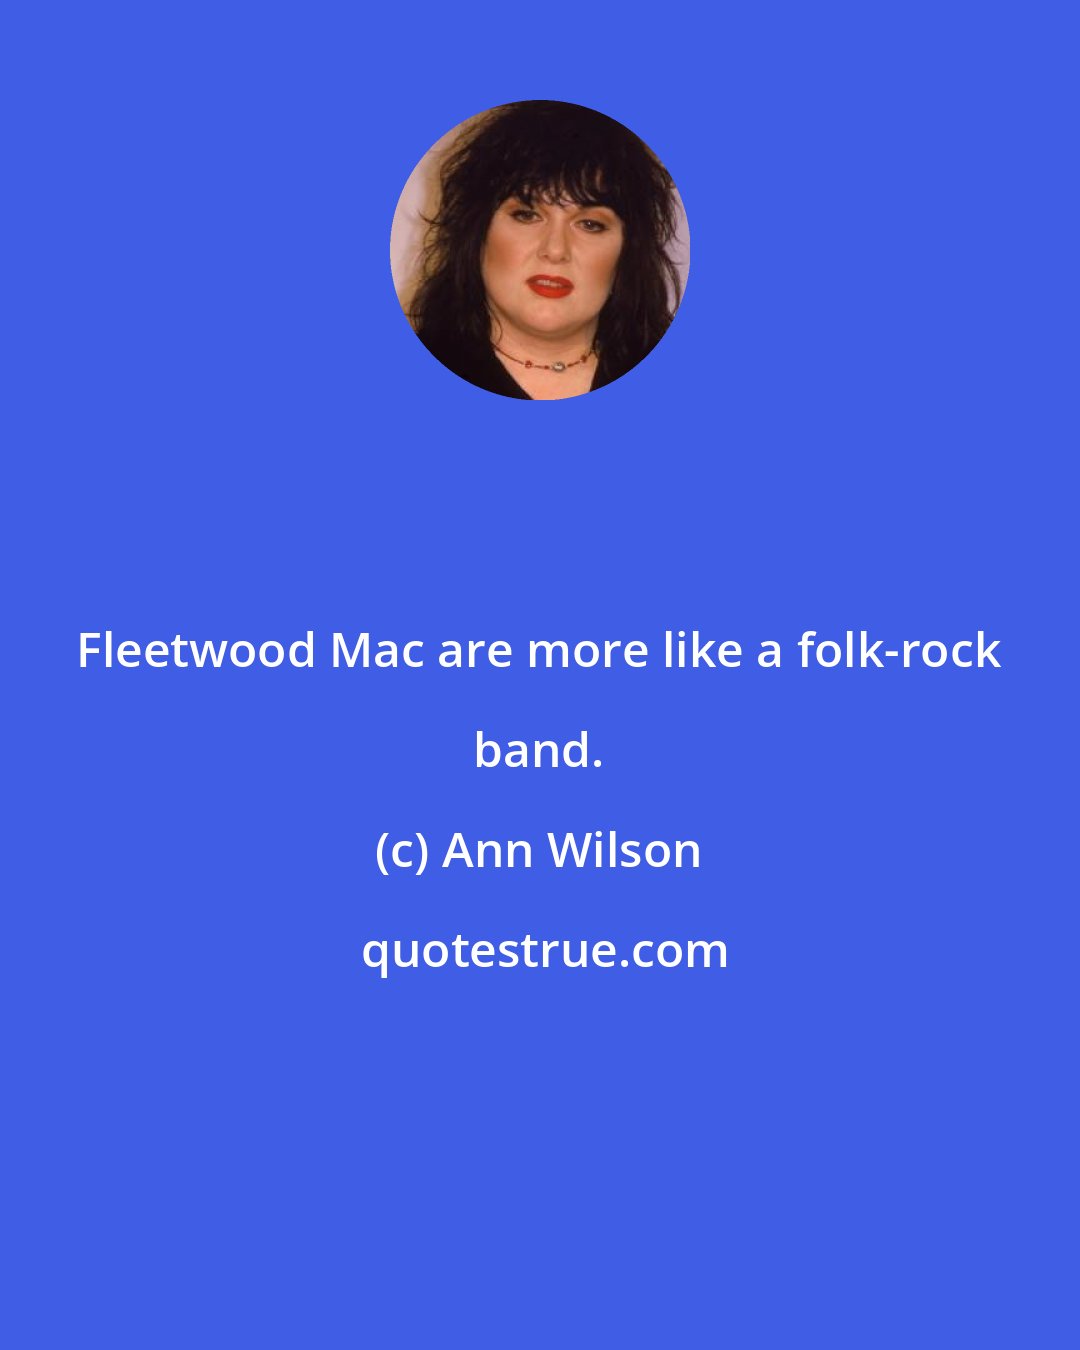 Ann Wilson: Fleetwood Mac are more like a folk-rock band.